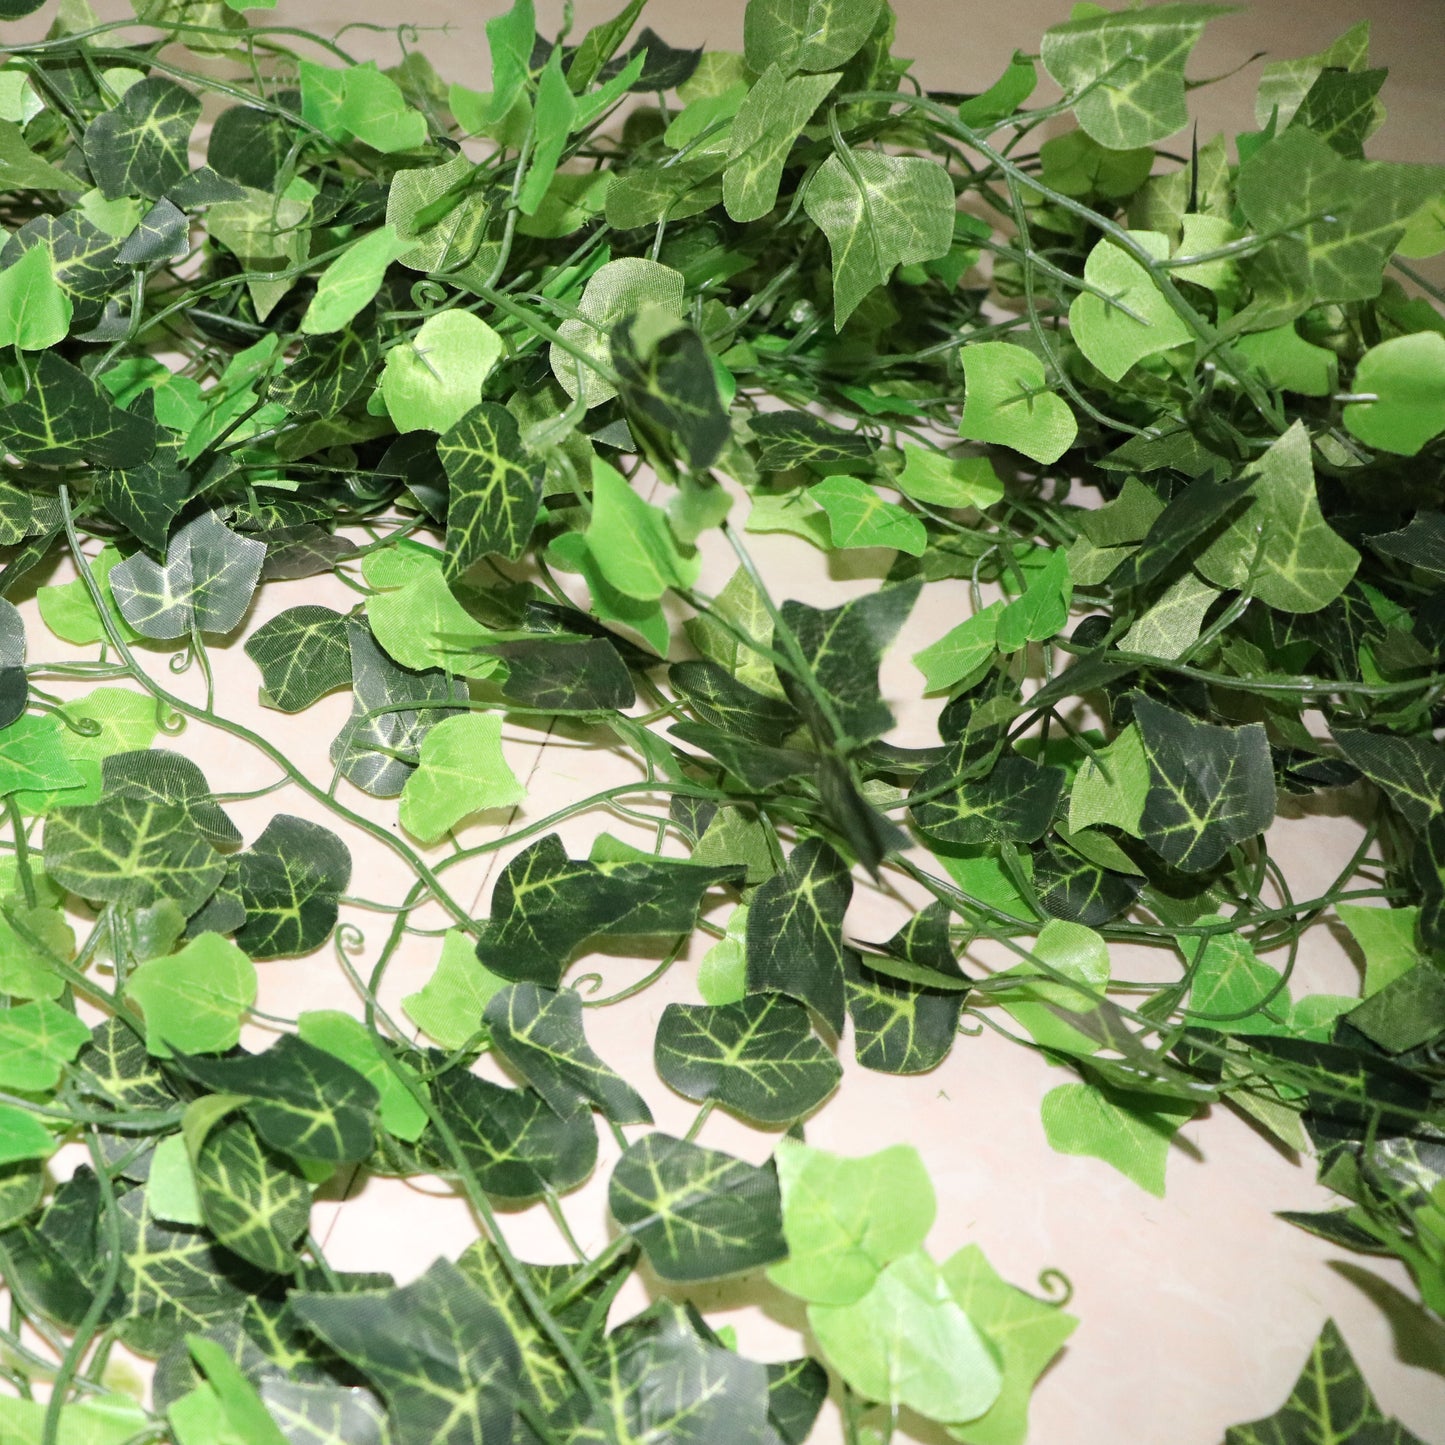 Artificial Ivy Leaf Garland - 2.4M Length - Home Decor, Green Ivy Wreath, Lifelike Foliage